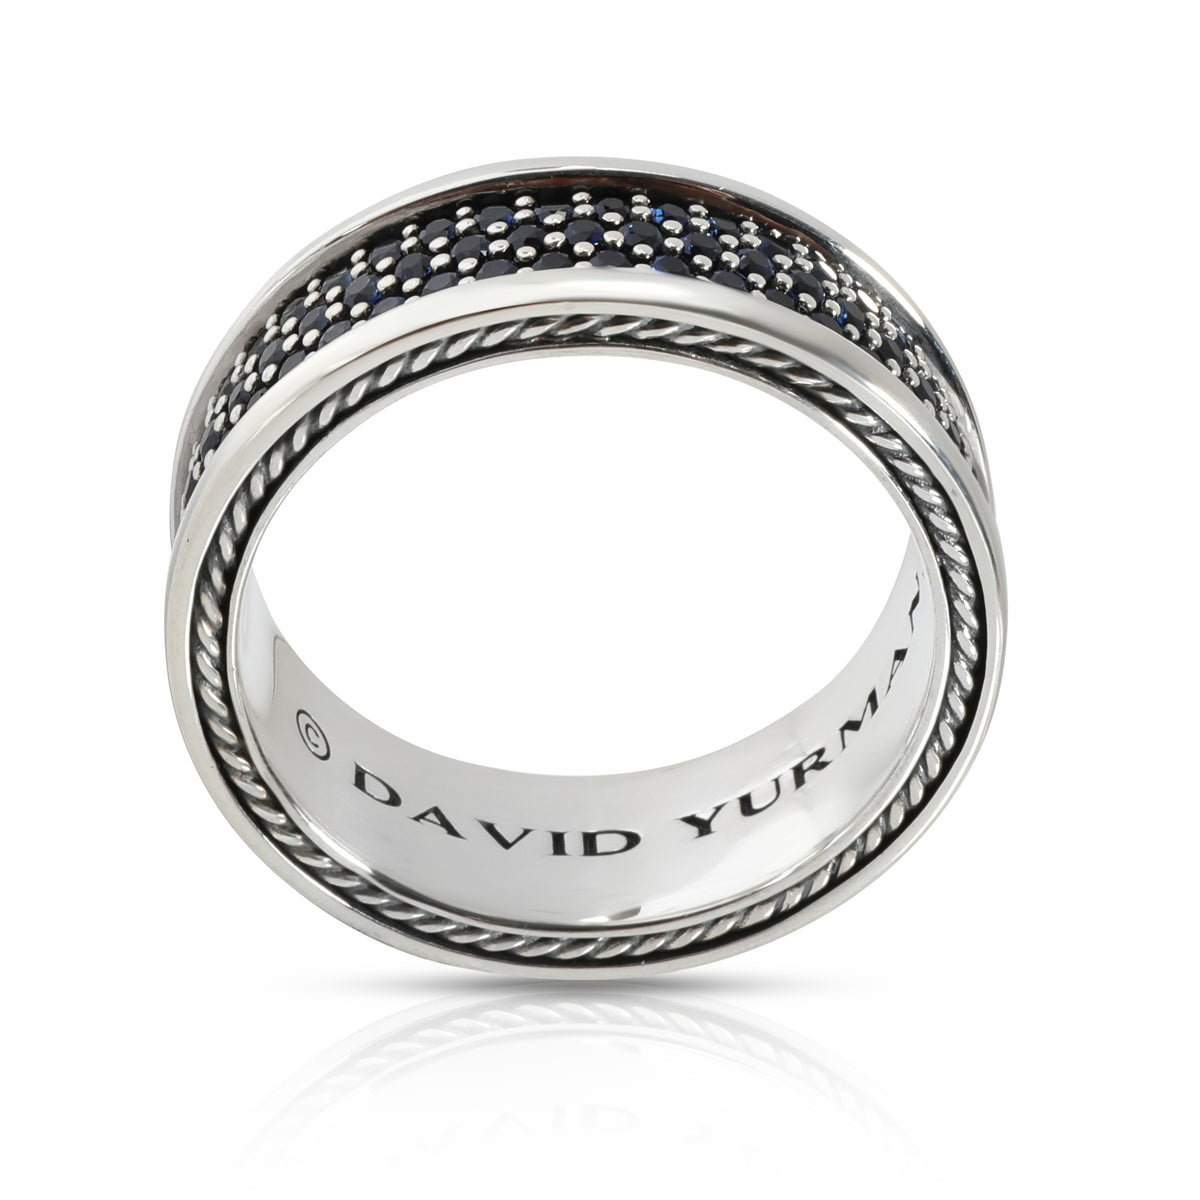 David Yurman Streamline Sapphire Men's Ring in Sterling Silver